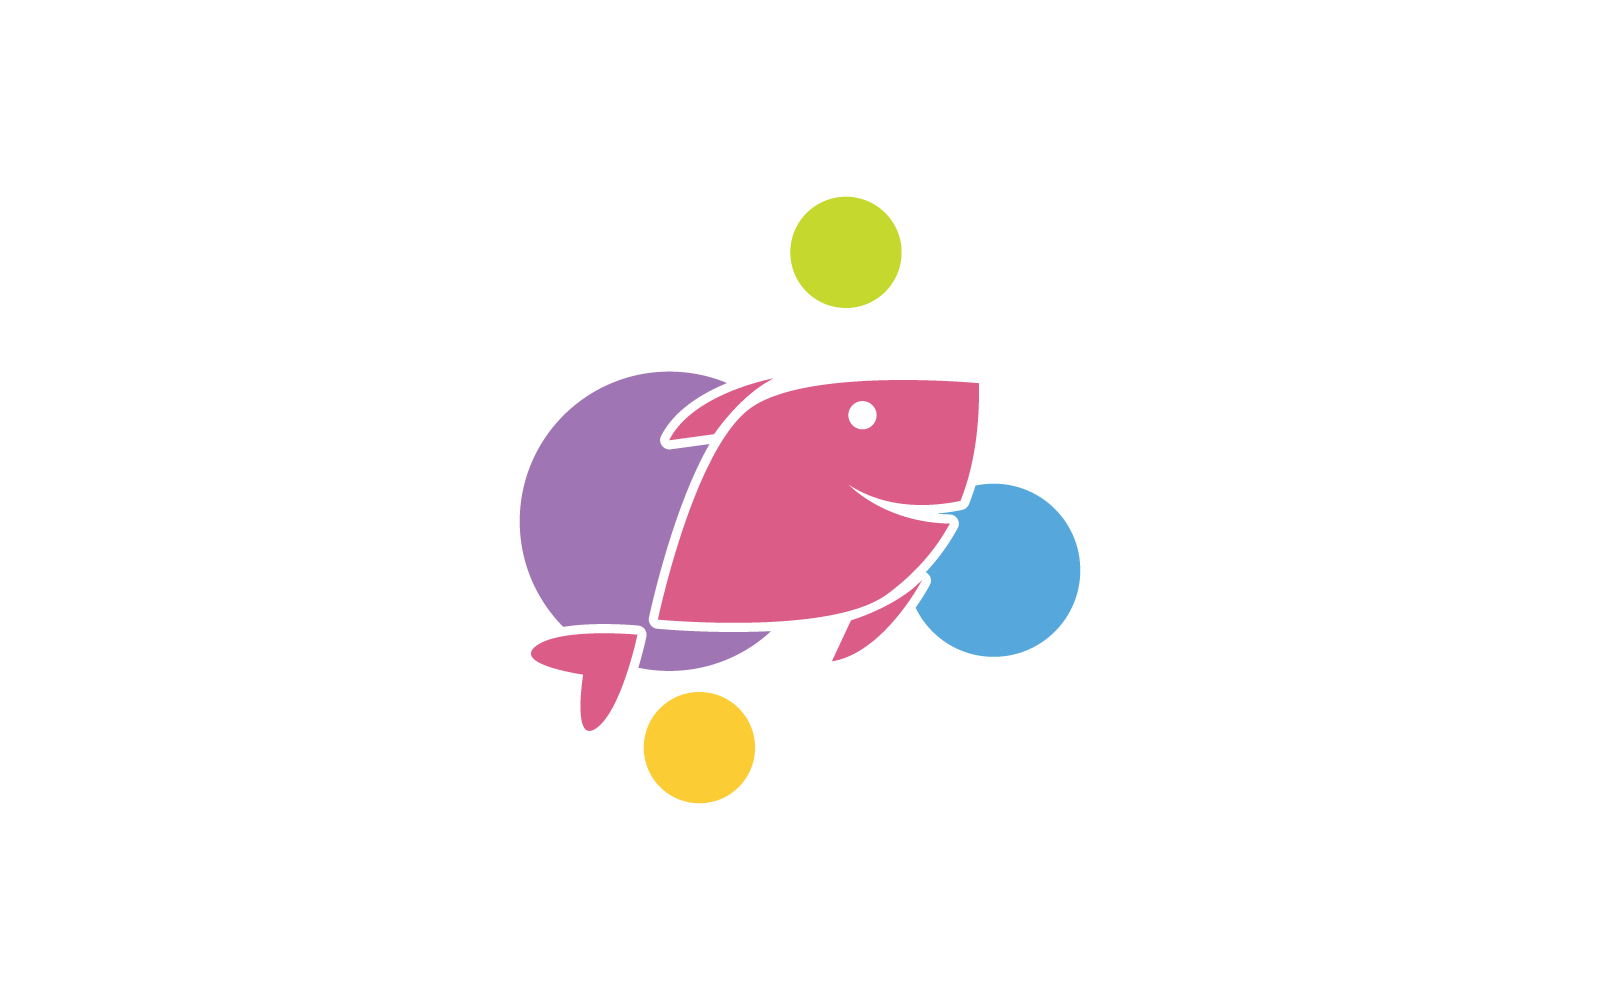 Ryba ilustracja logo wektor szablon projektu